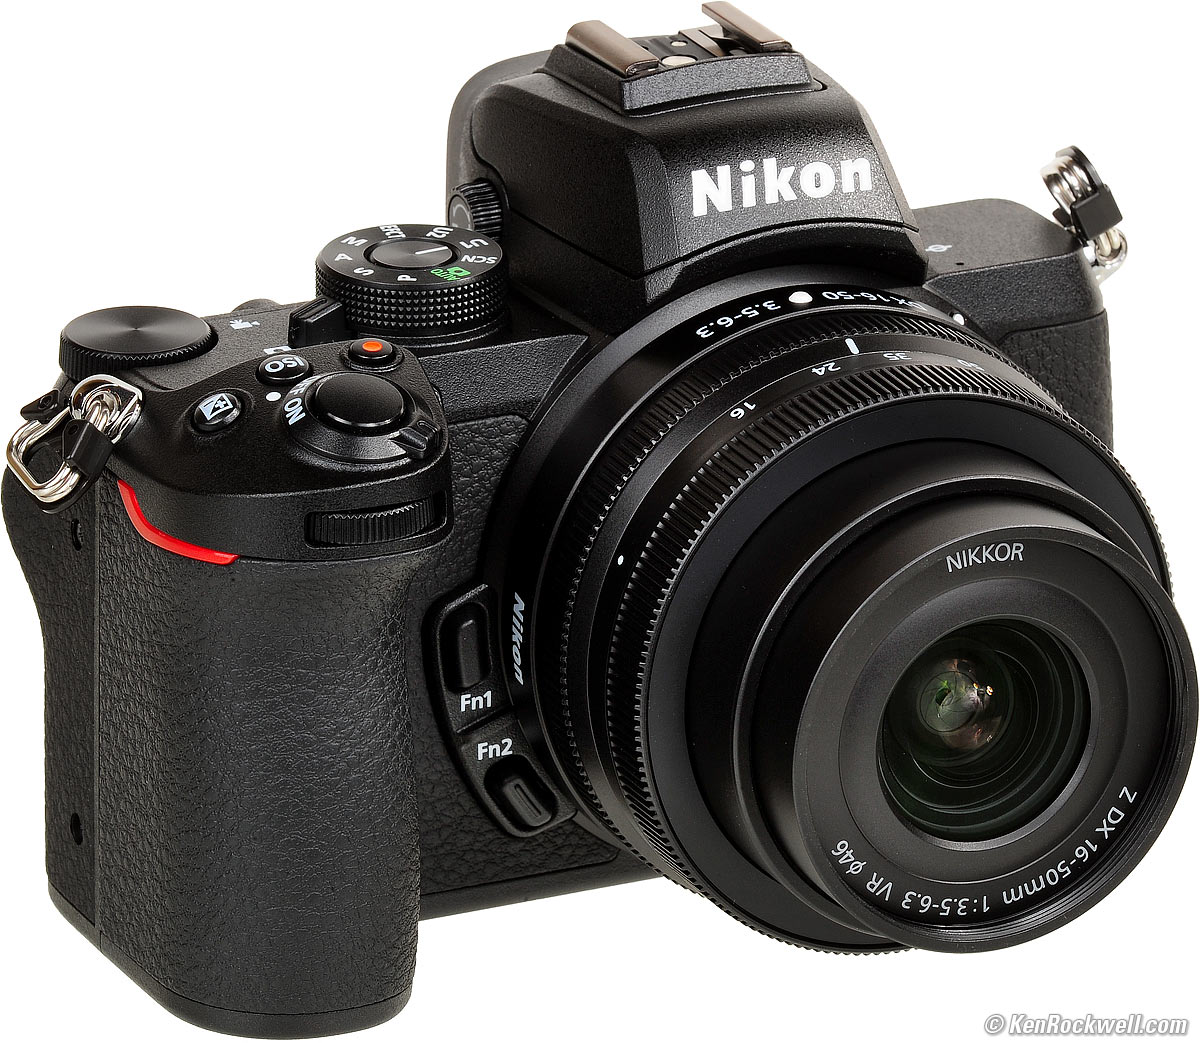 Travel Photography Gear: Nikon Z50 Review